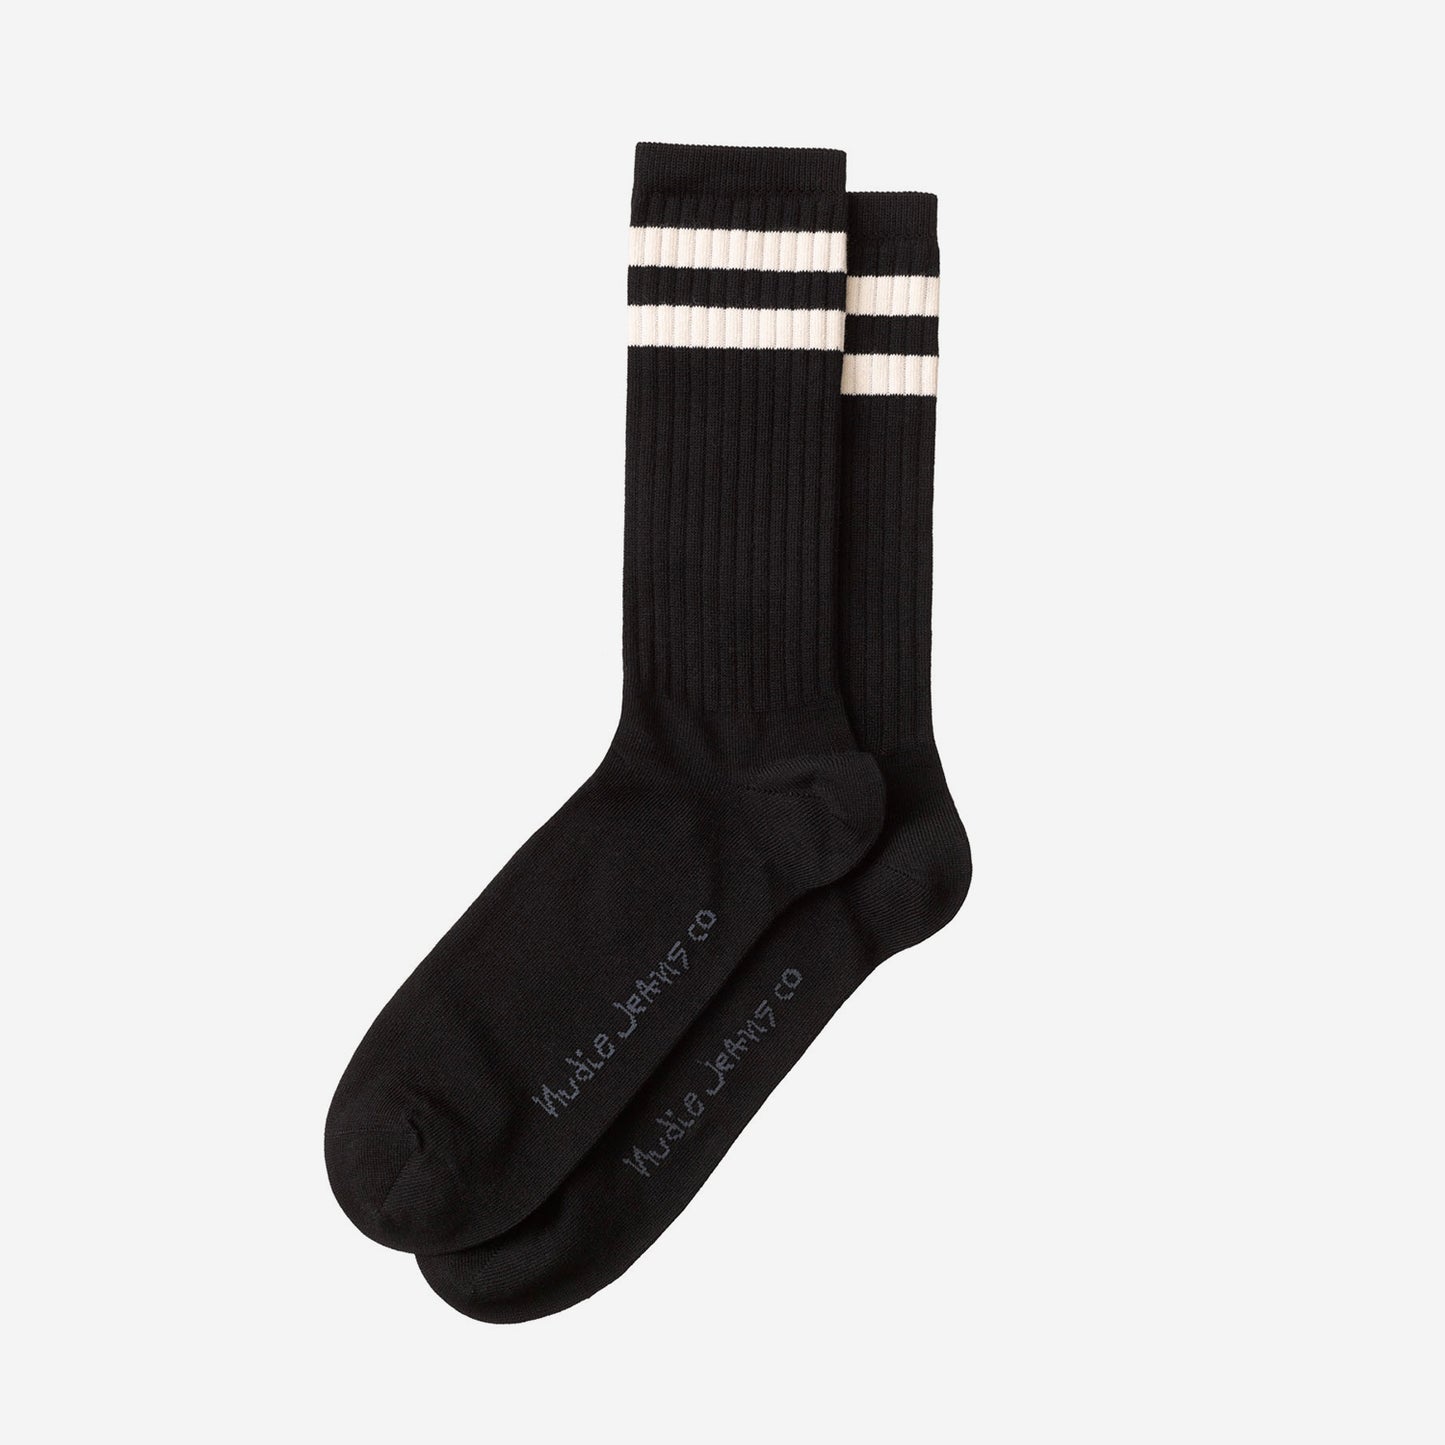 Nudie - Amundsson Sport Socks - Black – Abicus